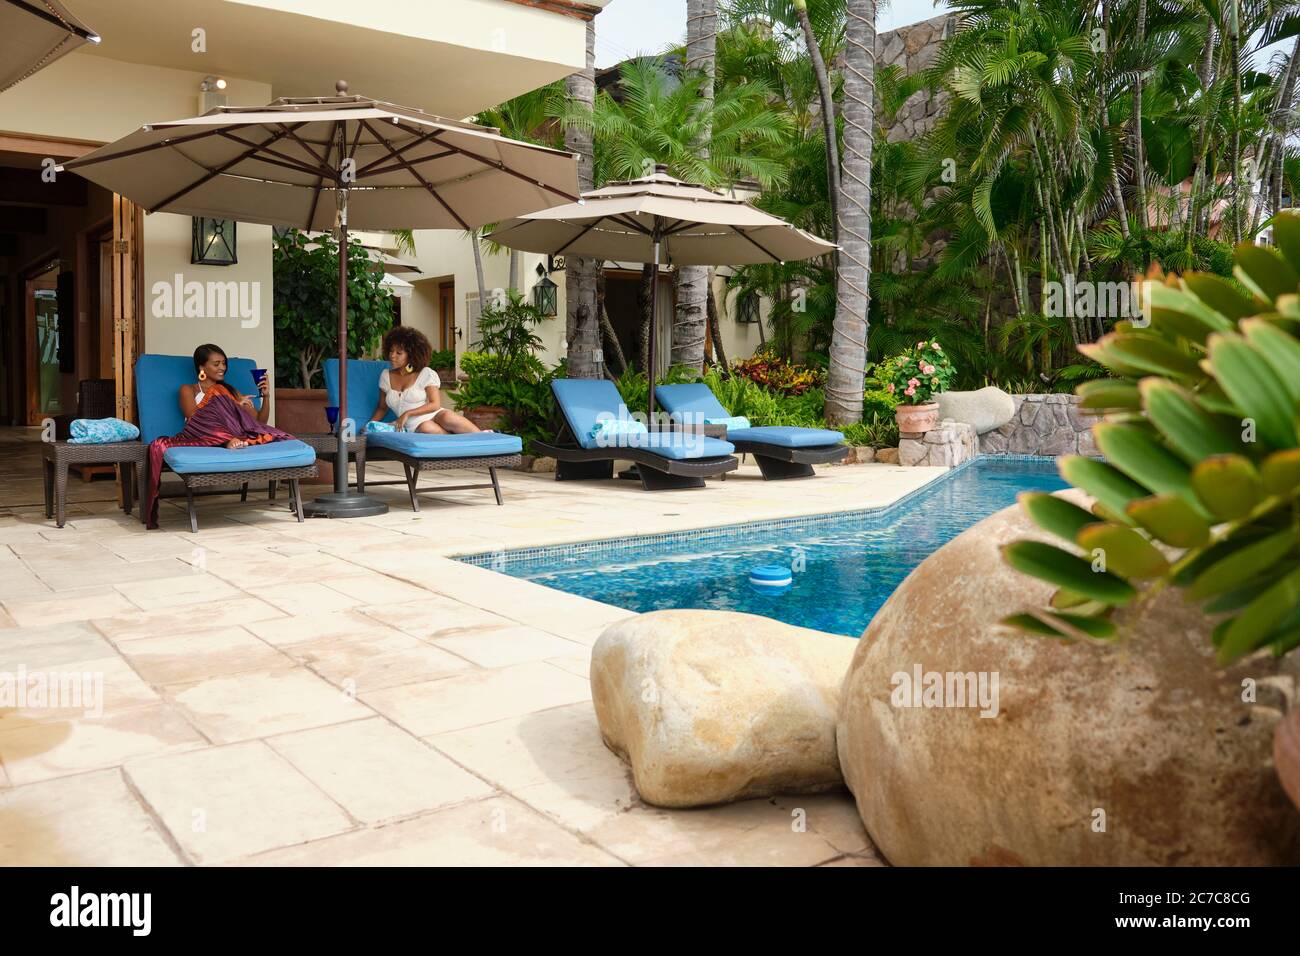 Lounging at the swimming pool - 2 women enjoying a stay at a vacation villa, Puerto Vallarta, Jalisco, Mexico Stock Photo